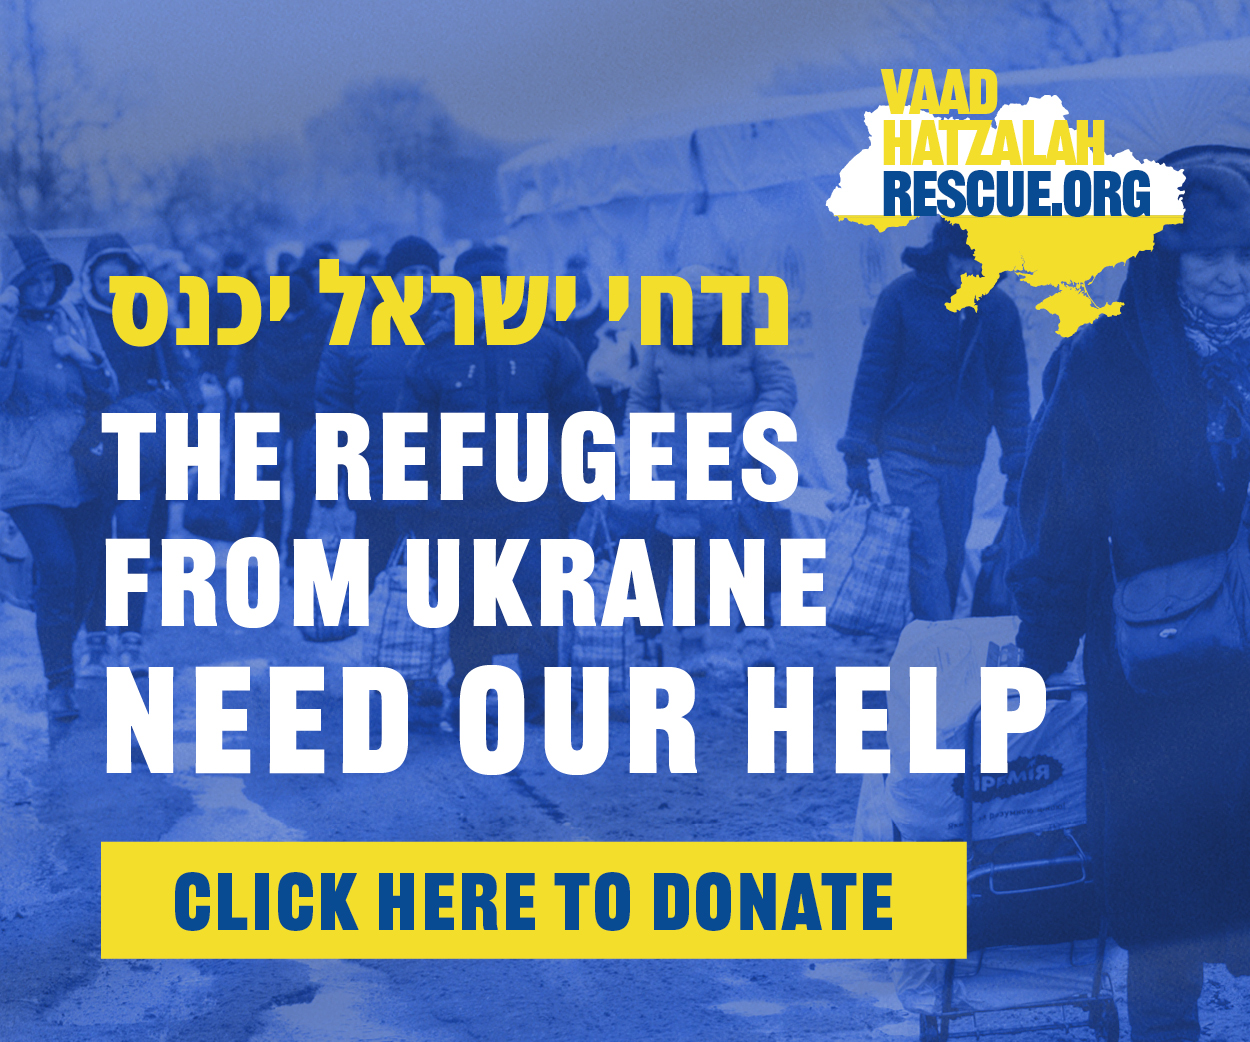 Vaad Hatzalah Rescue